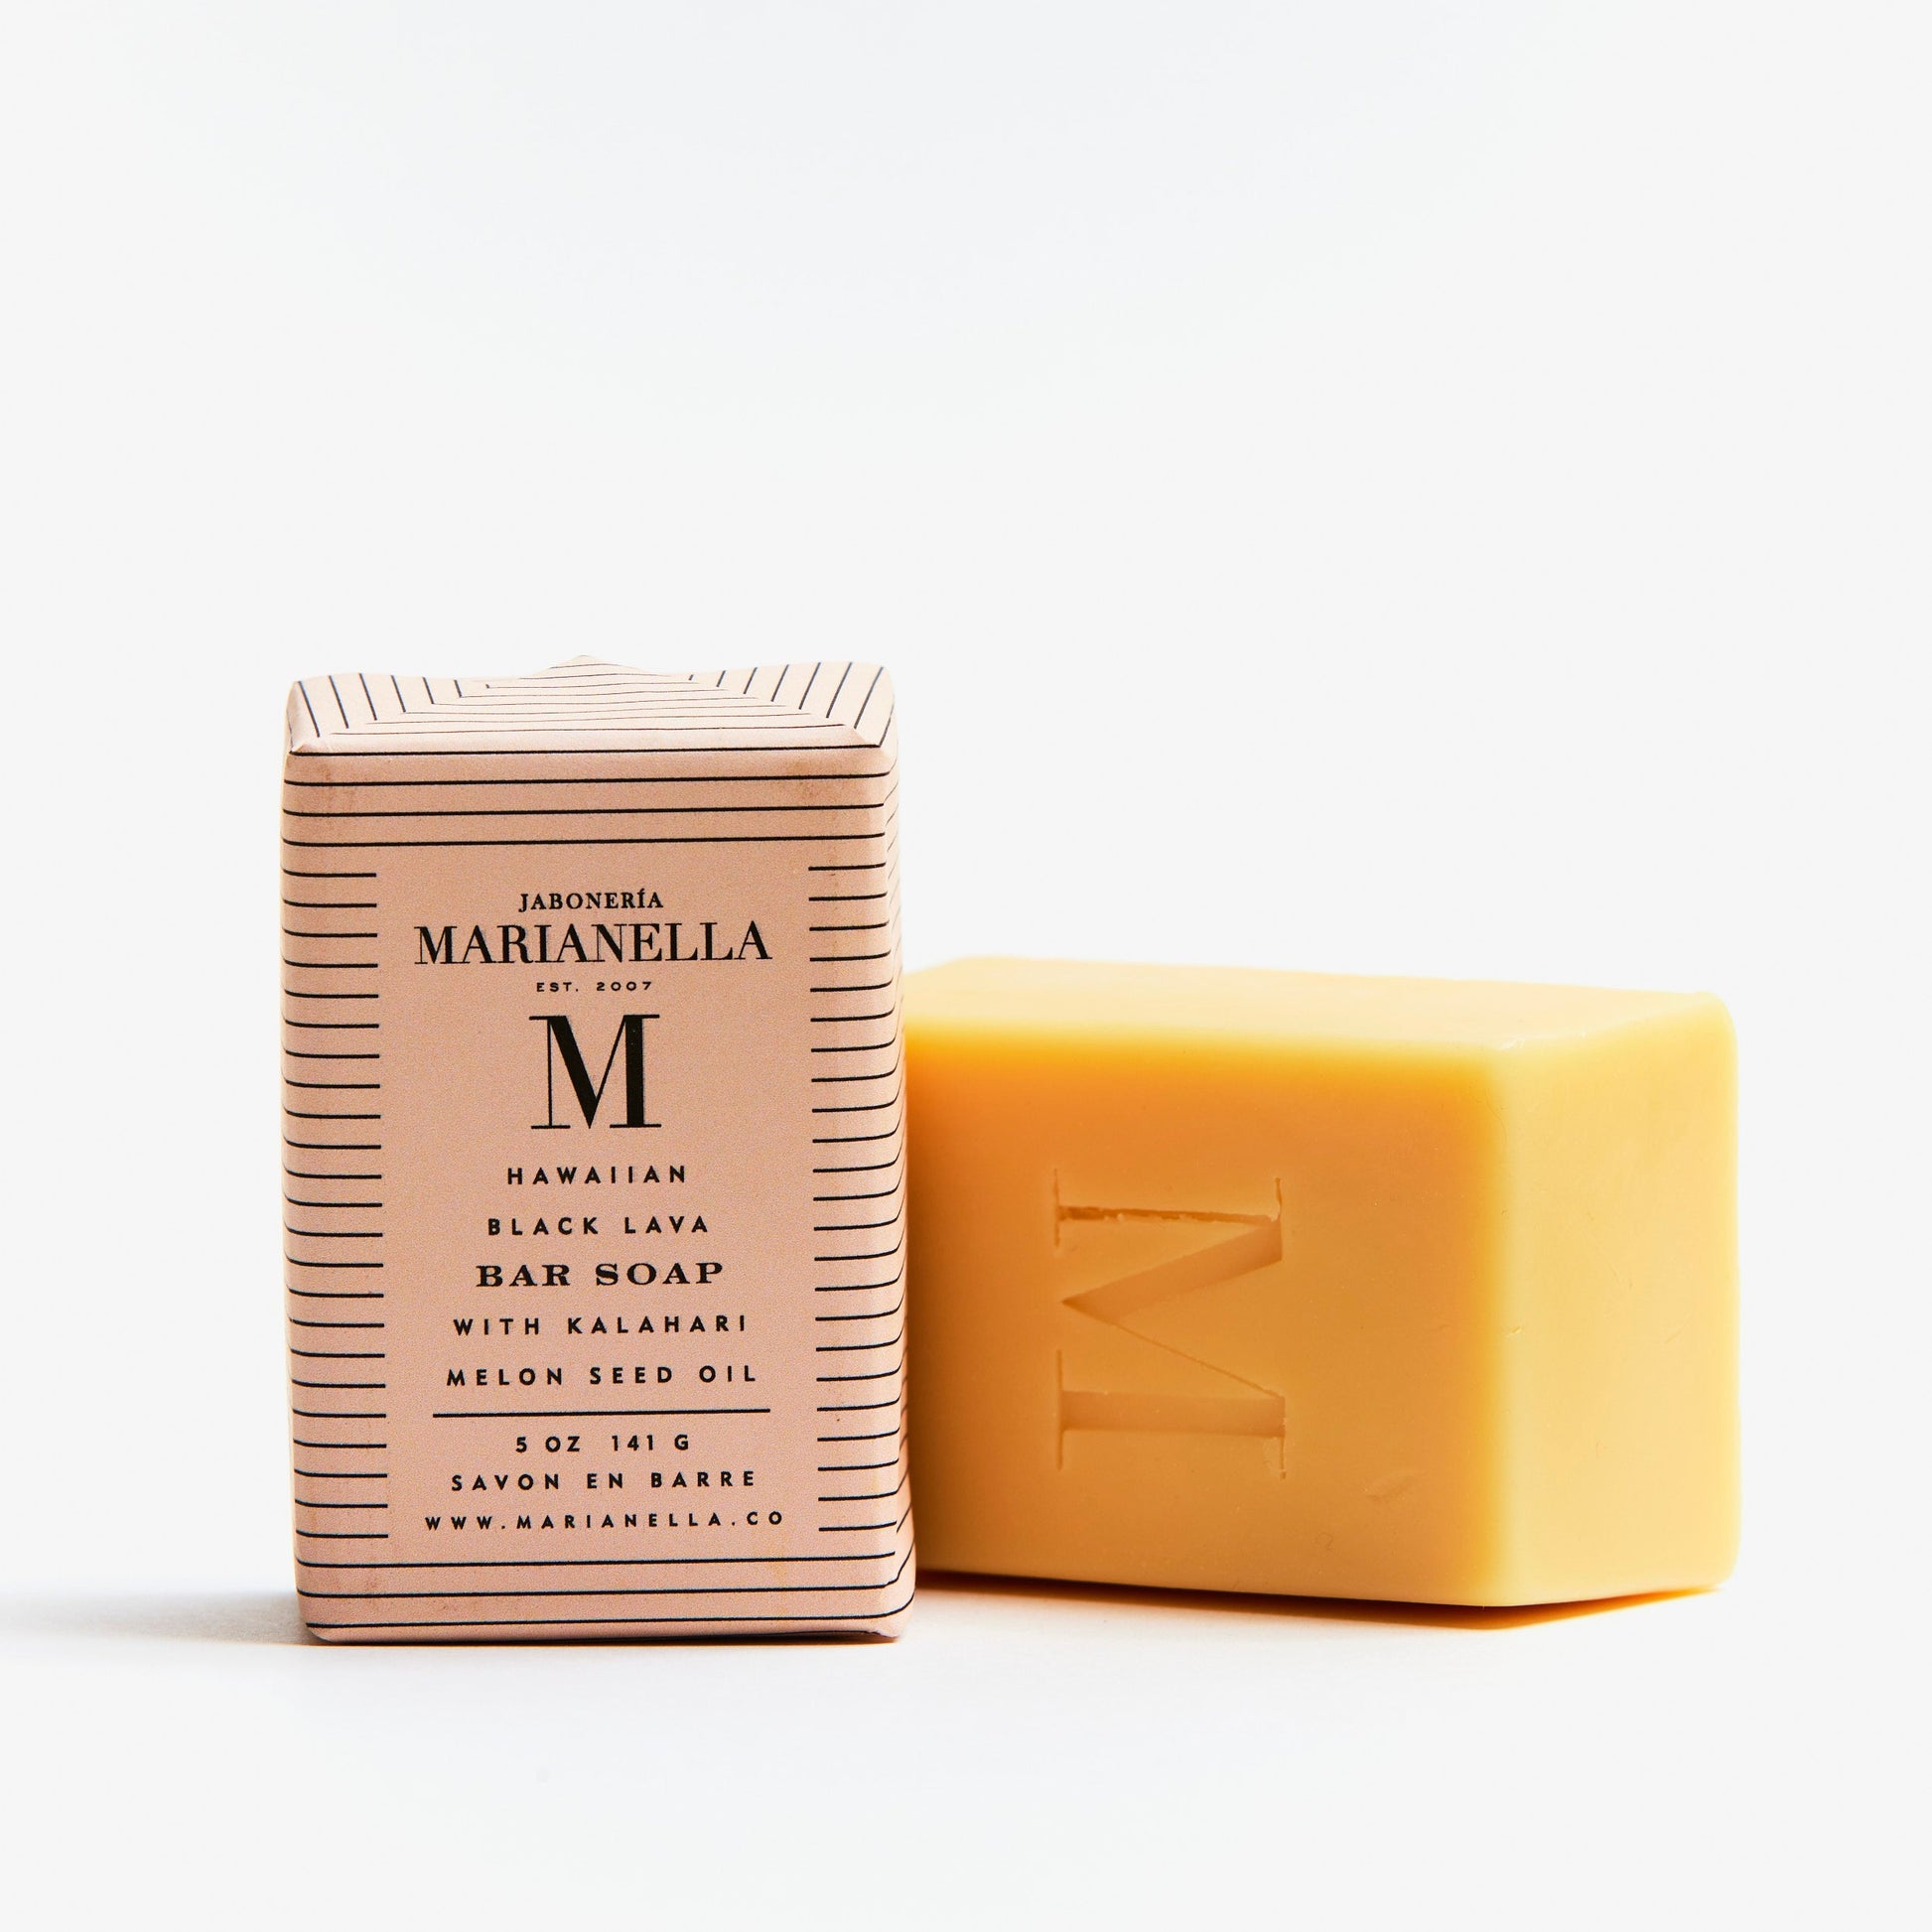 soap bars-Signature Soap Bars-Marianella